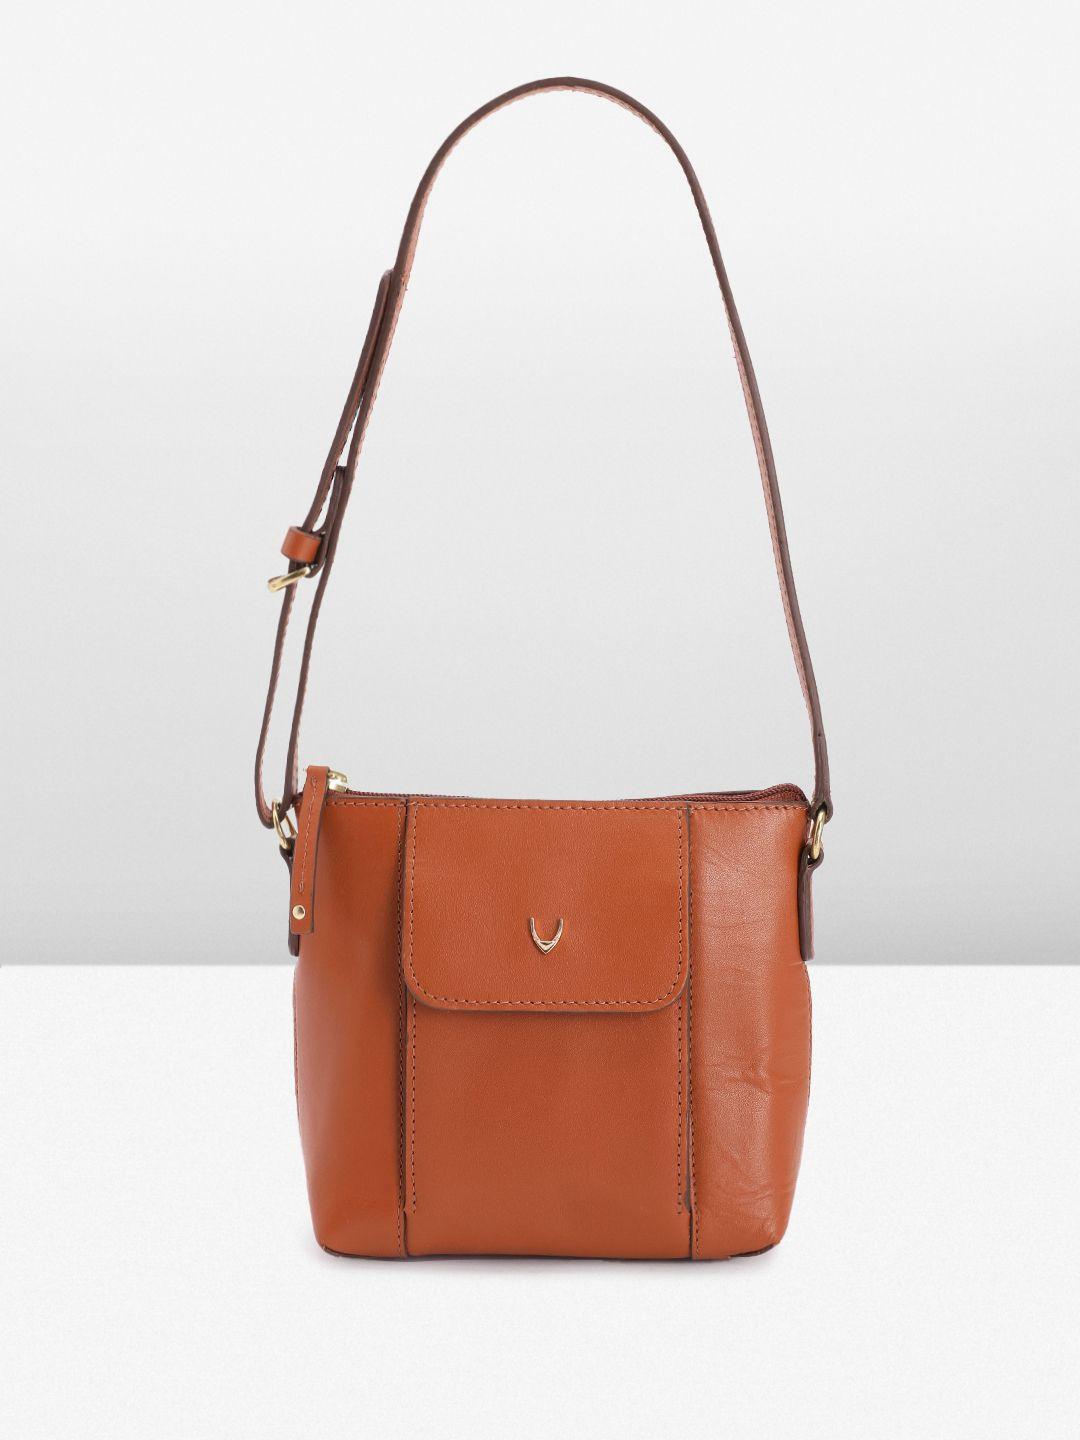 hidesign-solid-leather-structured-handheld-bag